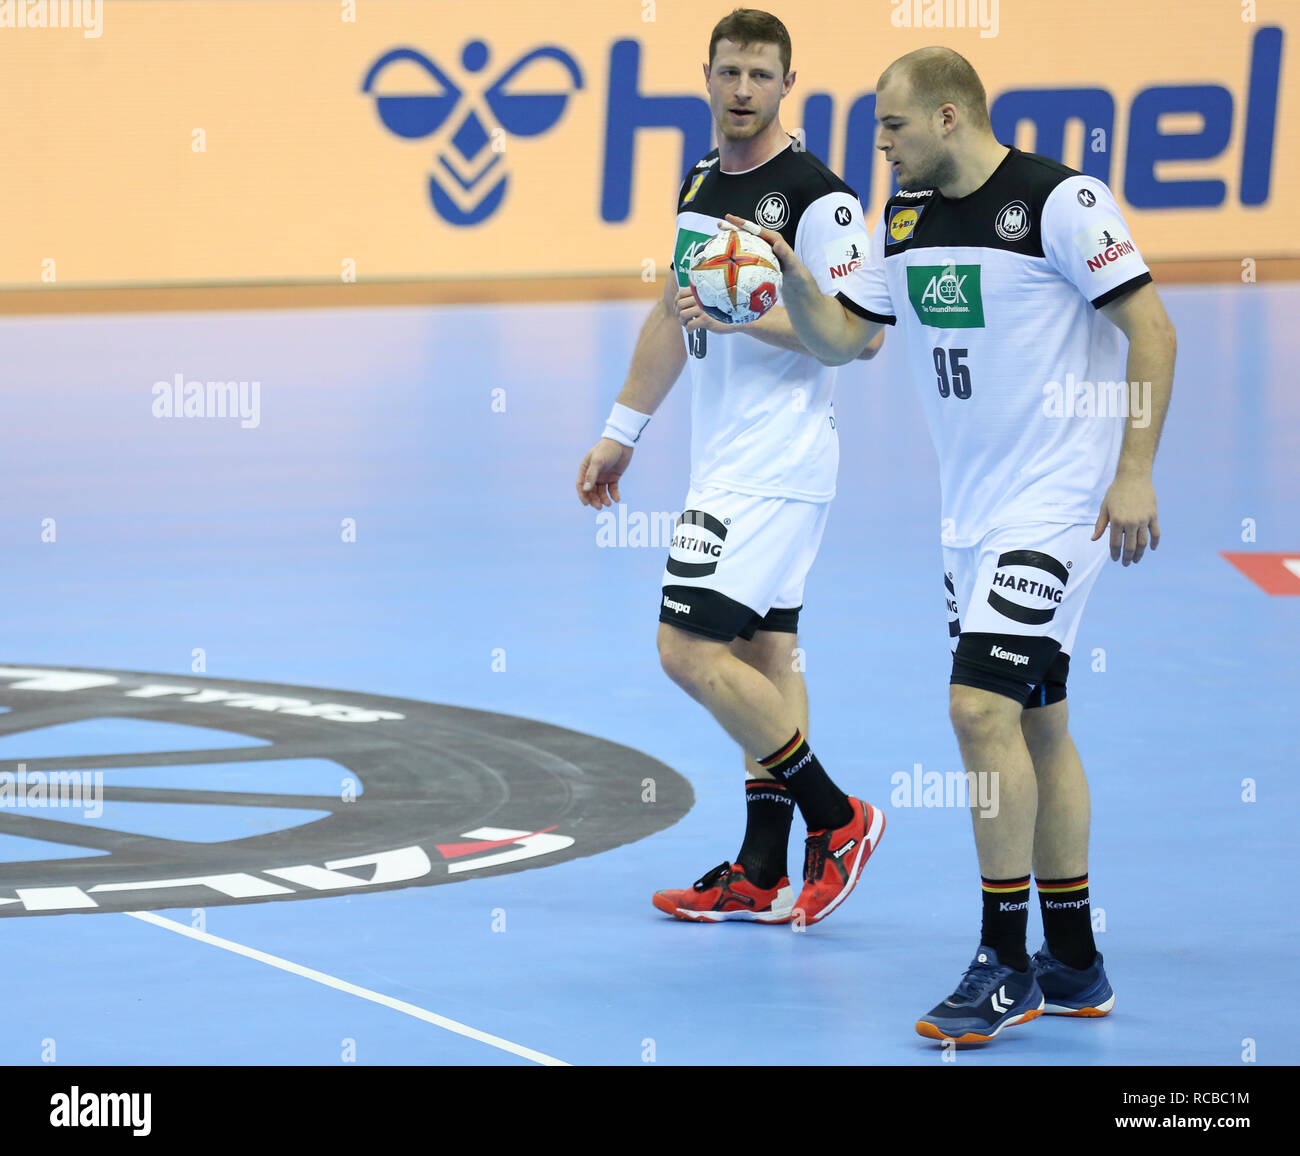 Berlin, Germany. 14th Jan, 2019. Handball IHF Men's World Championship: Russia v Germany. Martin Strobel (19) and Paul Drux (95) for Germany Credit: Mickael Chavet/Alamy Live News Stock Photo